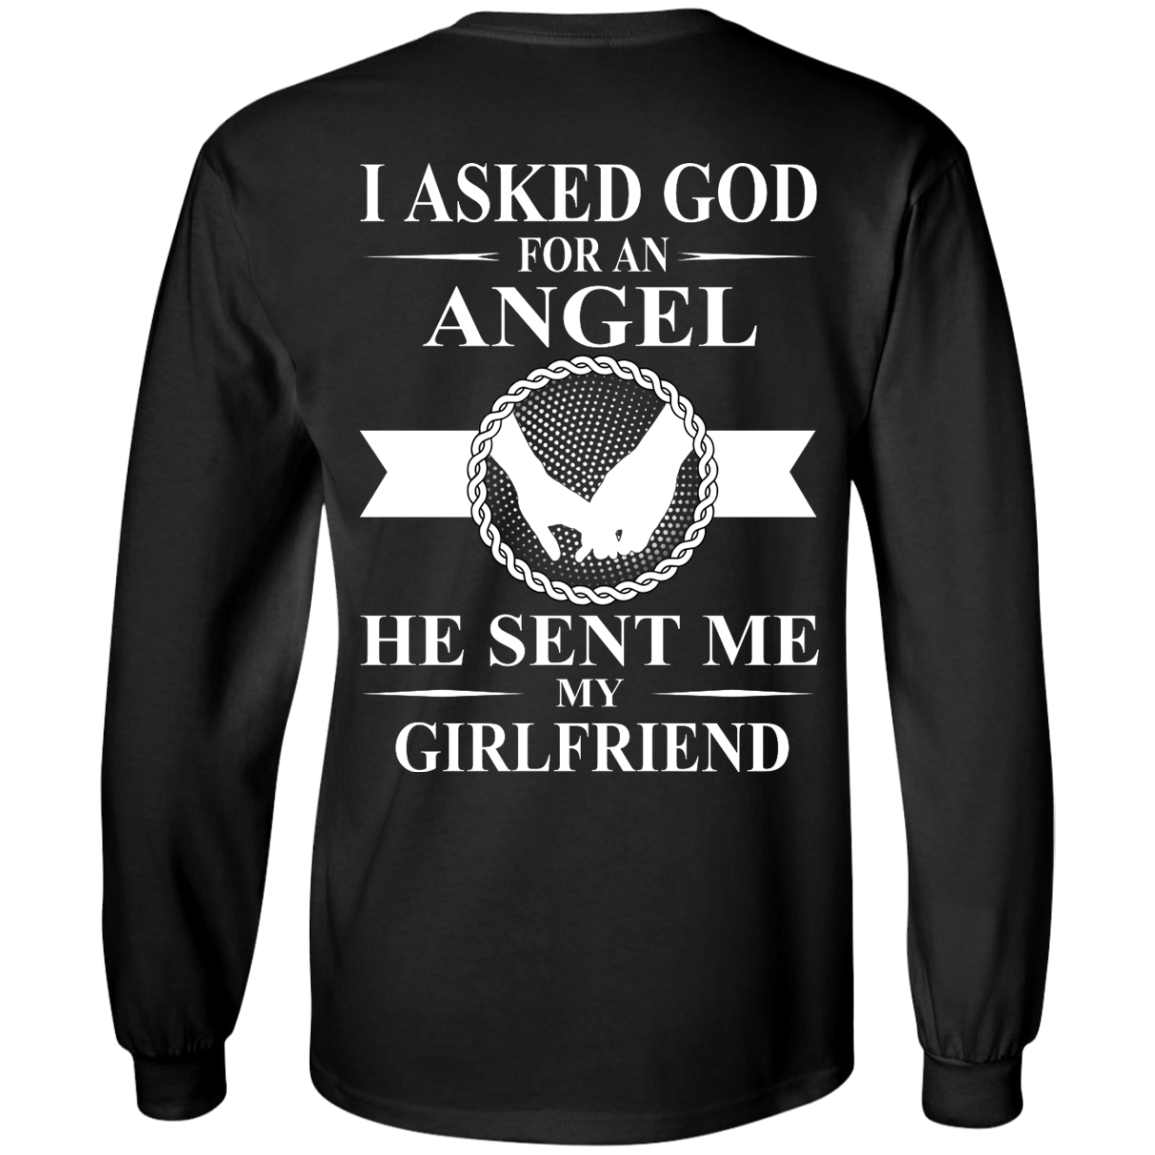 I Asked God For An Angel He Sent Me My Girlfriend shirt, long sleeve